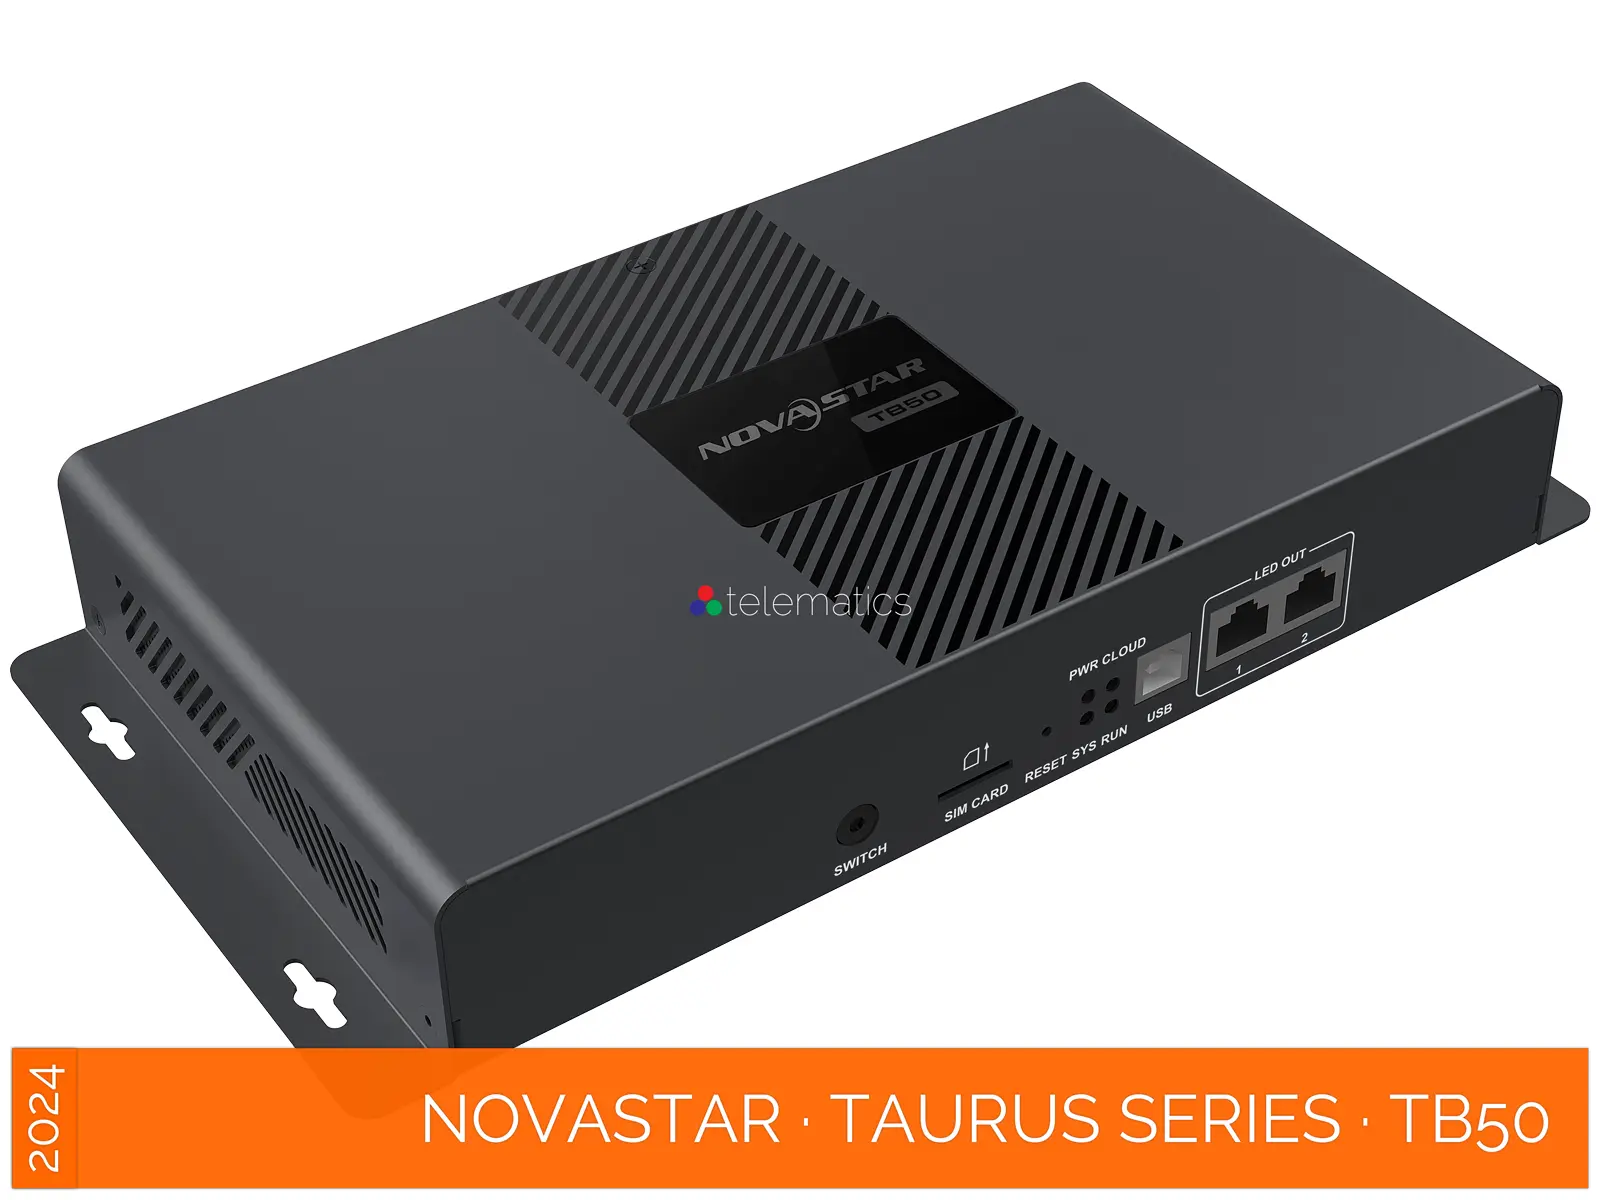 NovaStar Cloud · Media Player · Taurus Series · TB50 ·  Network · WiFi · 4G · 1,300,000 pixels · VNNOX · Viplex · review · price · cost · priced from $ 425 per unit